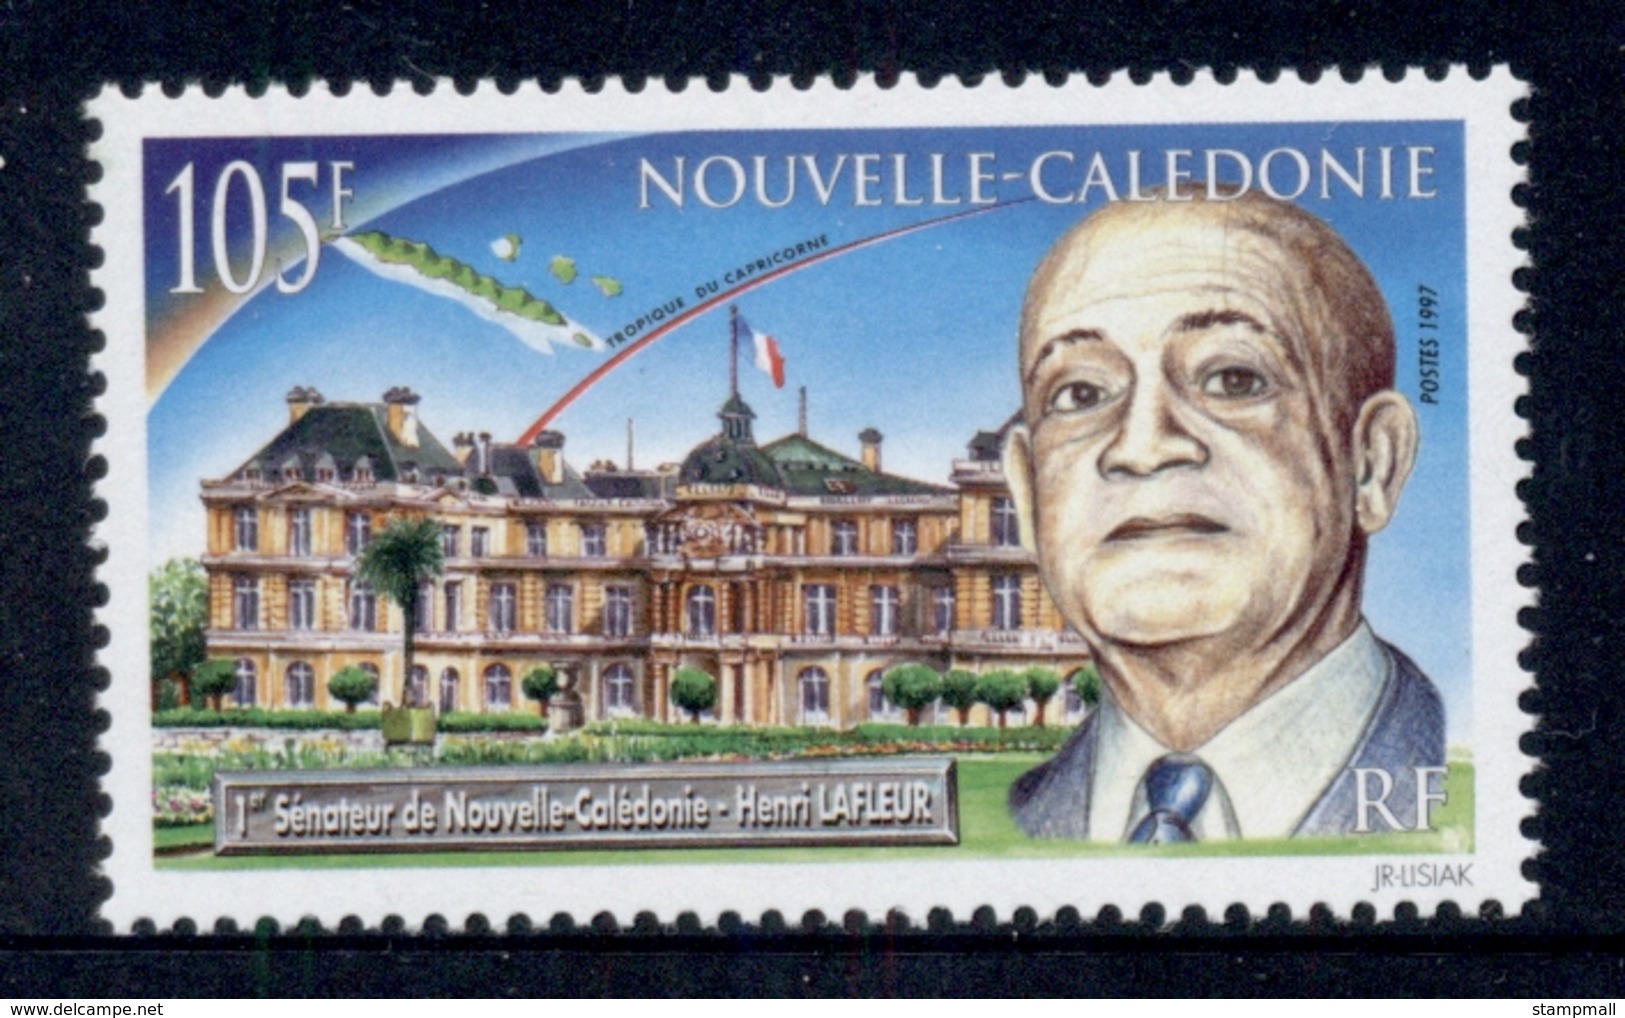 New Caledonia 1997 Henri La Fleur, Senator MUH - Unused Stamps